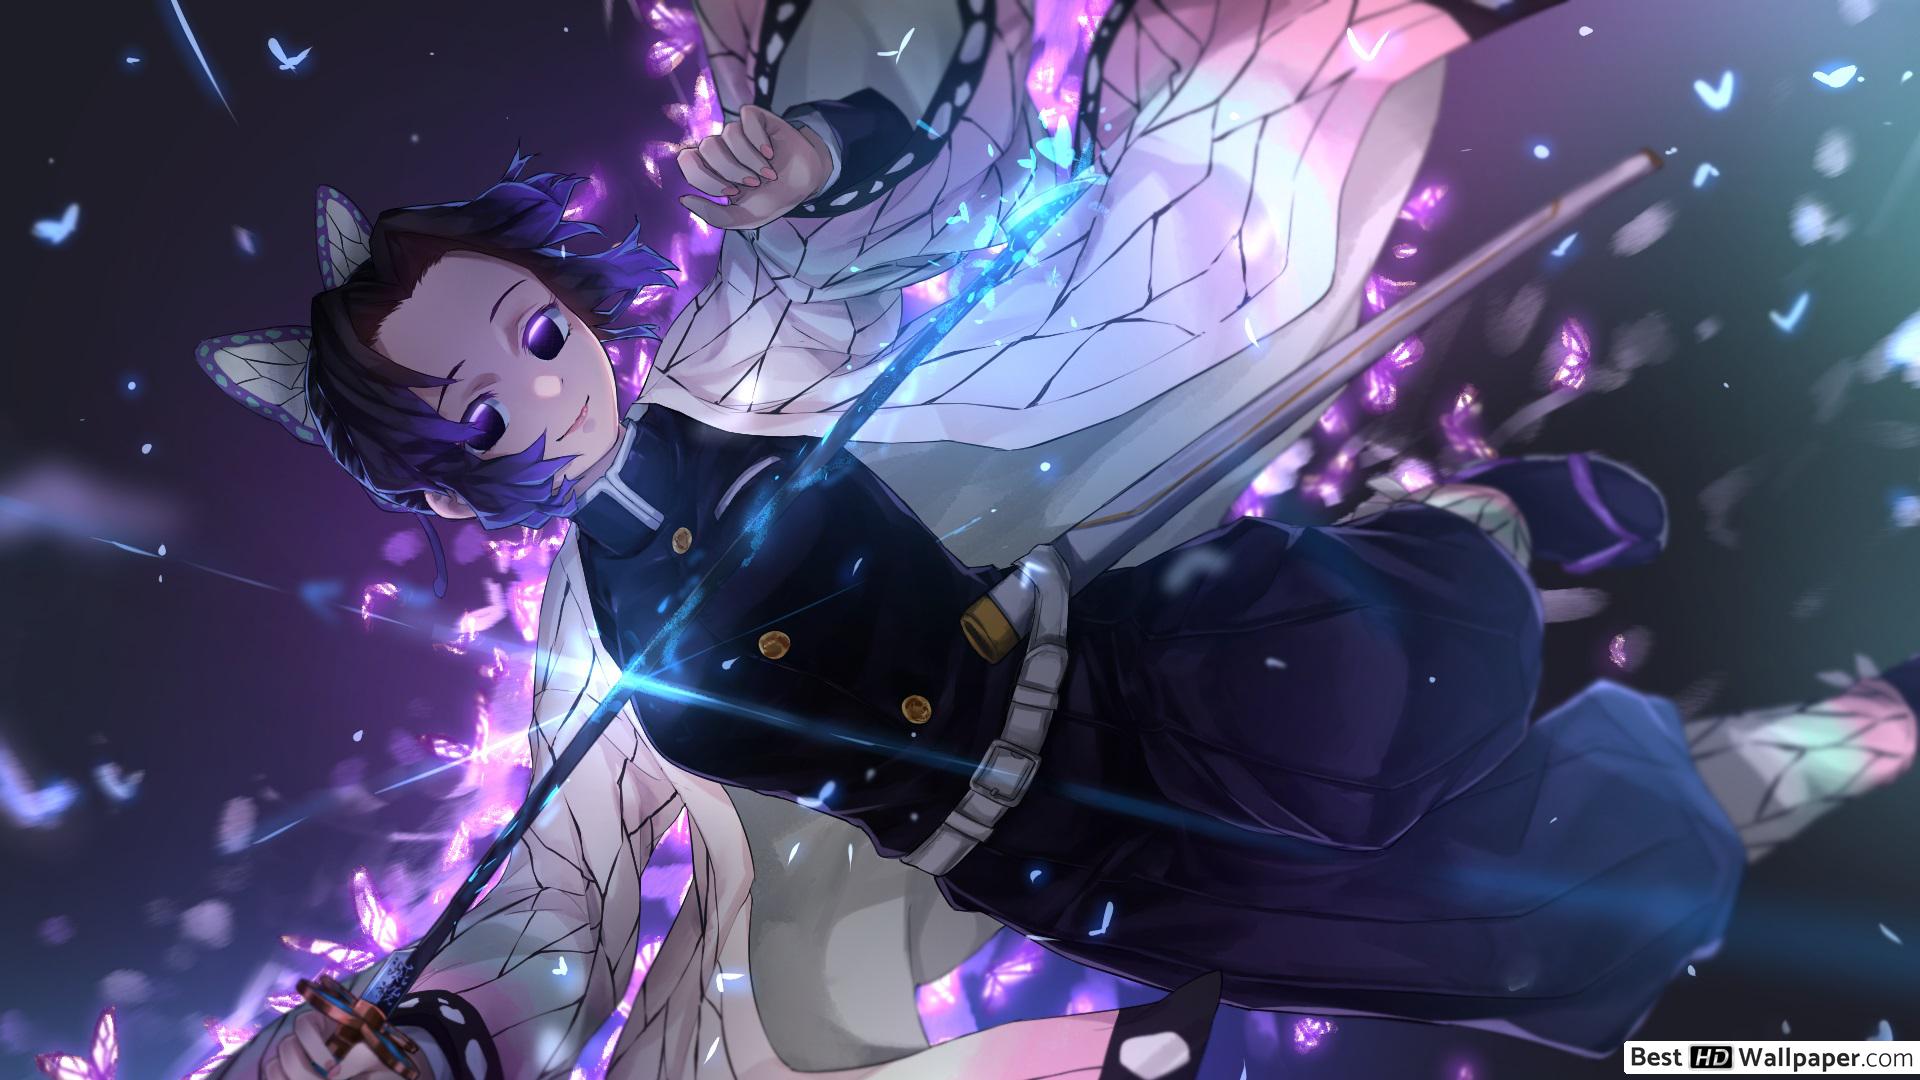 Demon Slayer Giyuu Tomioka With A Long Sharp Sword Under Purple Flowers 4K  HD Anime Wallpapers  HD Wallpapers  ID 40321